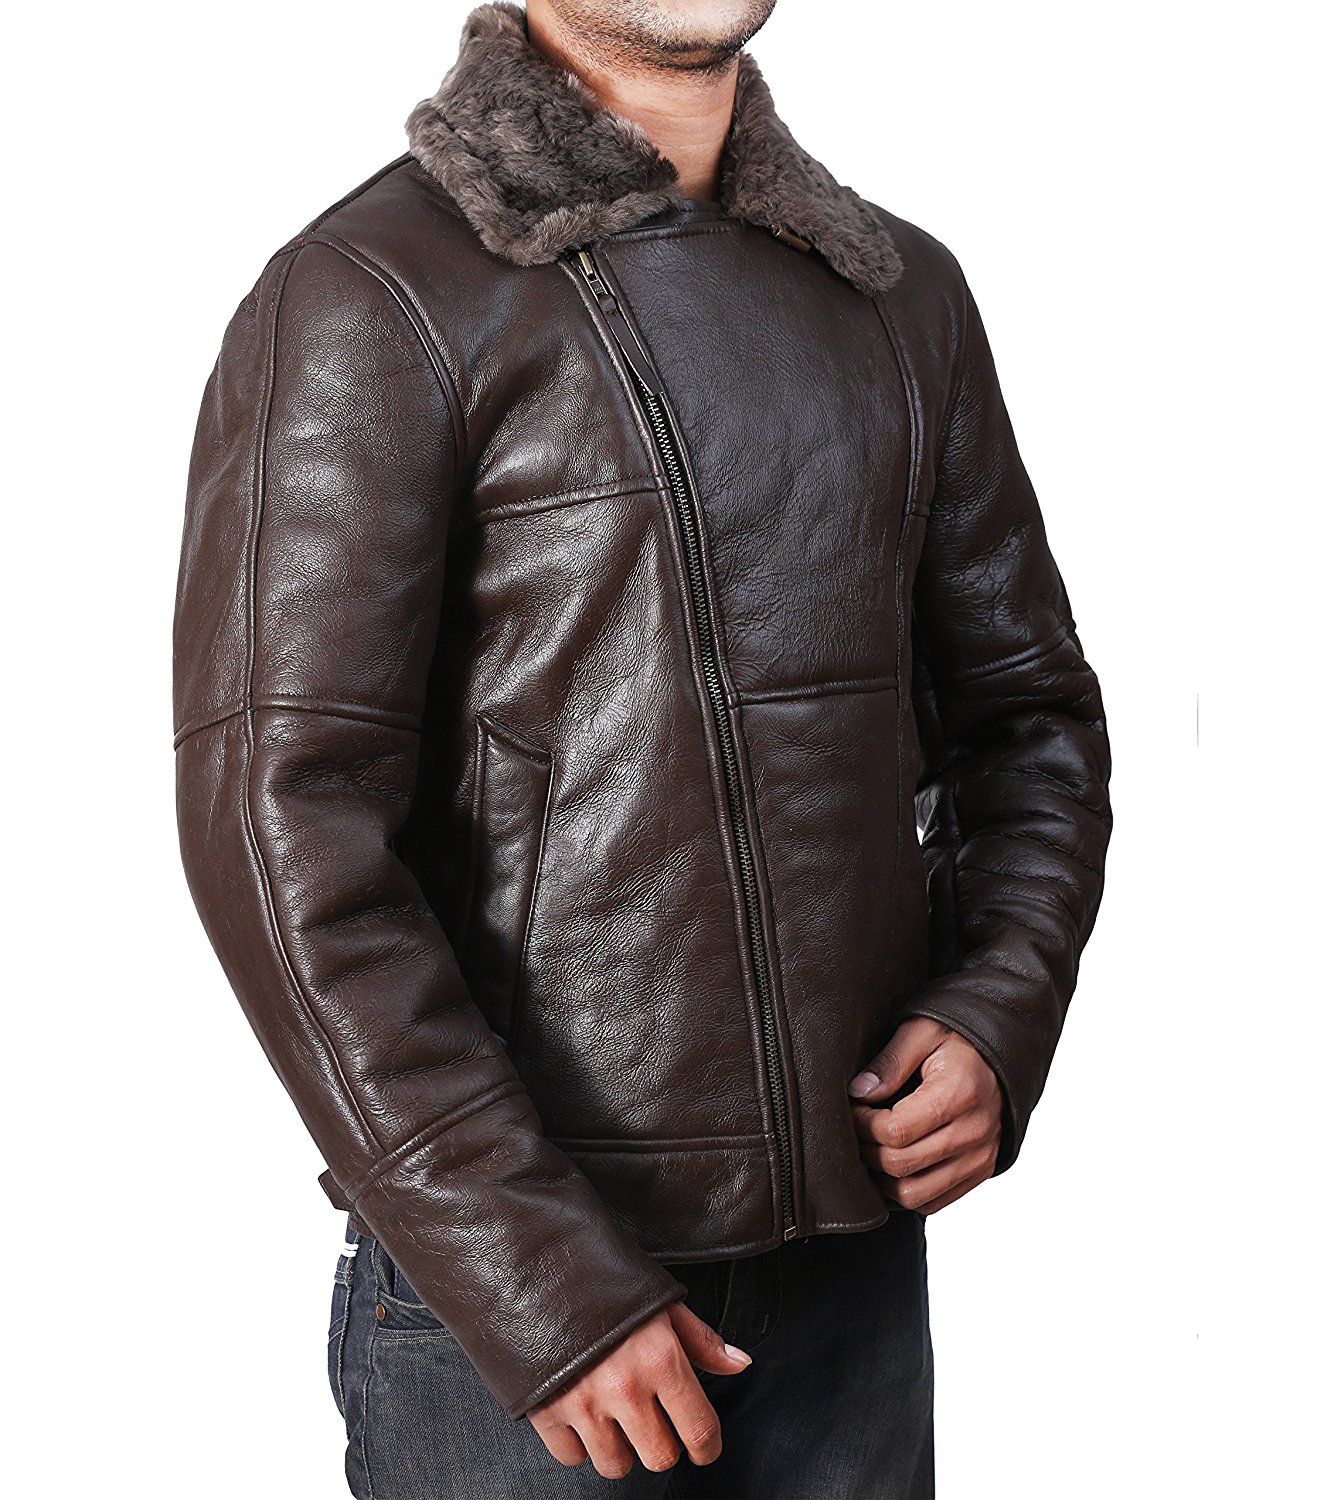 B3 Bomber Dark Brown Leather Jacket - Mens Leather Jackets On Sale | Movies Leather Jackets In ...